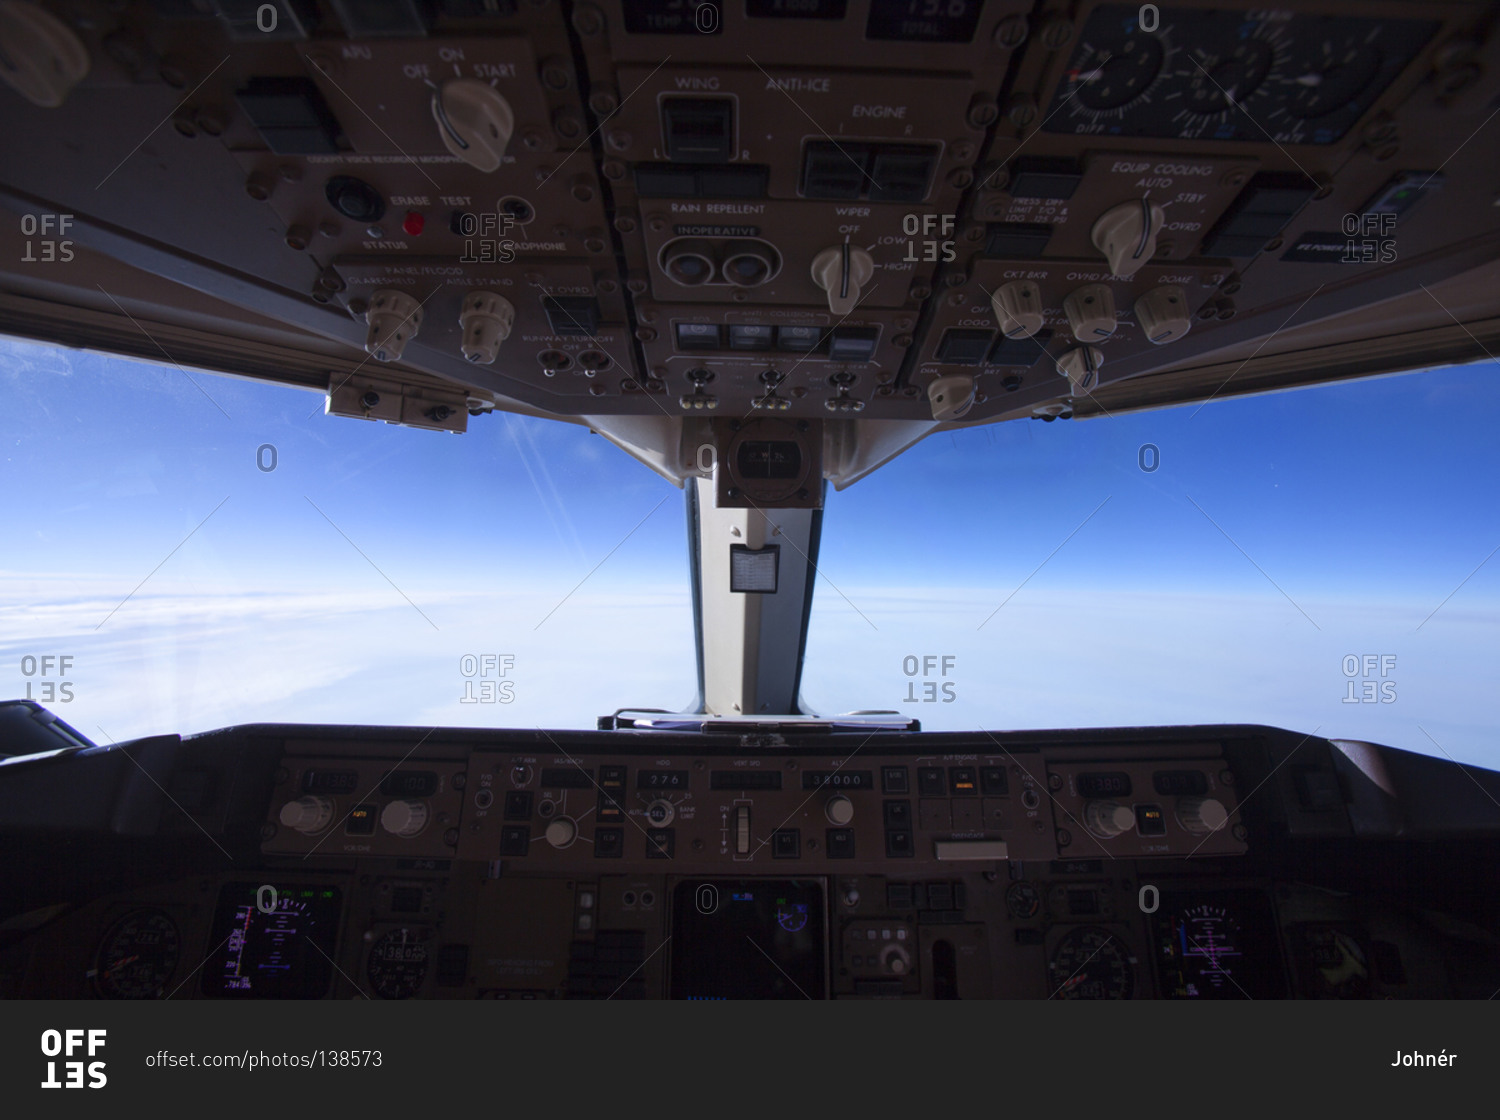 Plane control panel